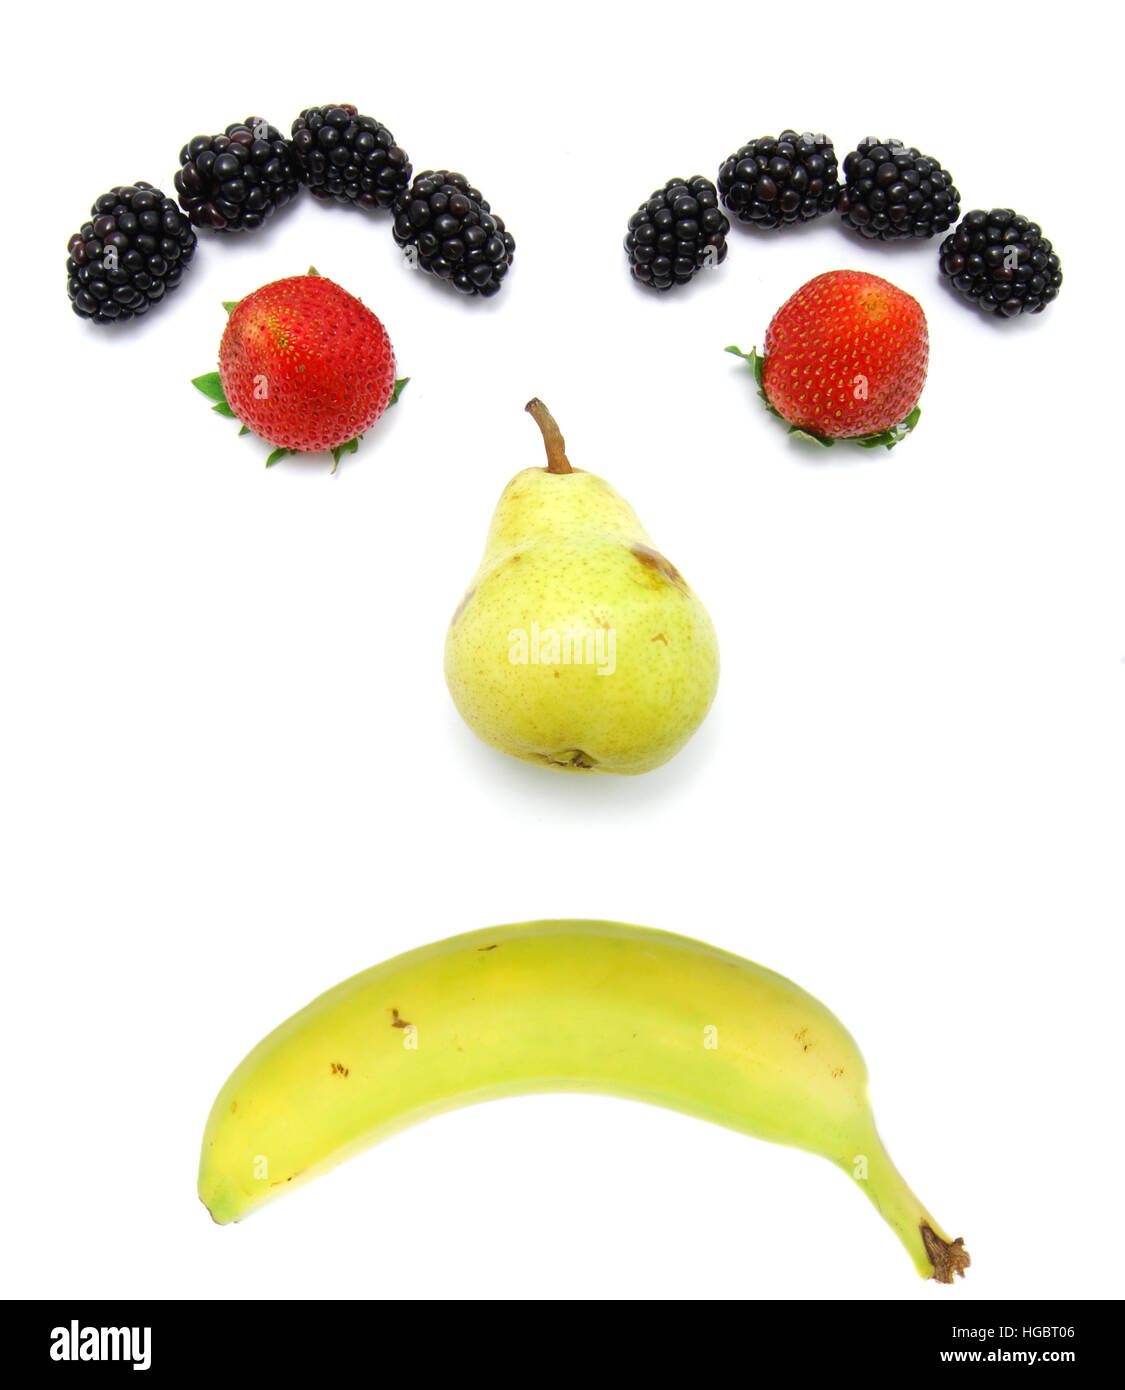 Sad Fruit Face. Kid friendly. Banana, pear, strawberry, and blackberry. Stock Photo